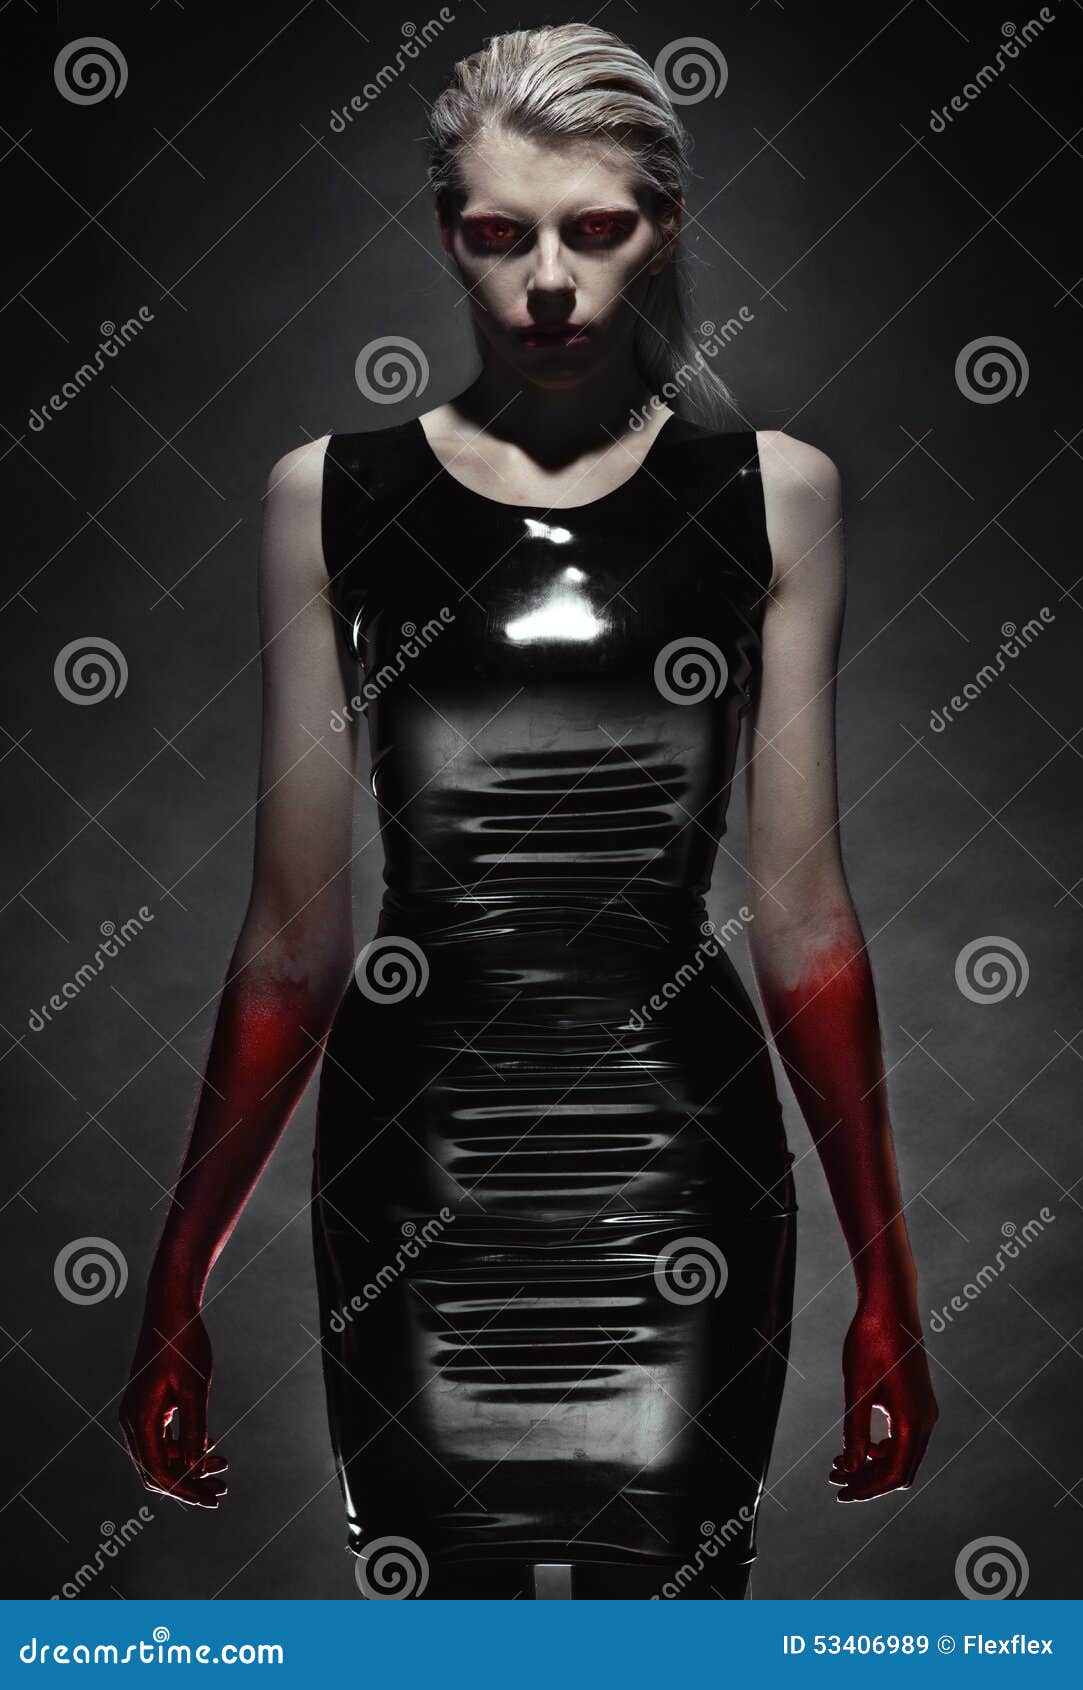 woman in black latex dress